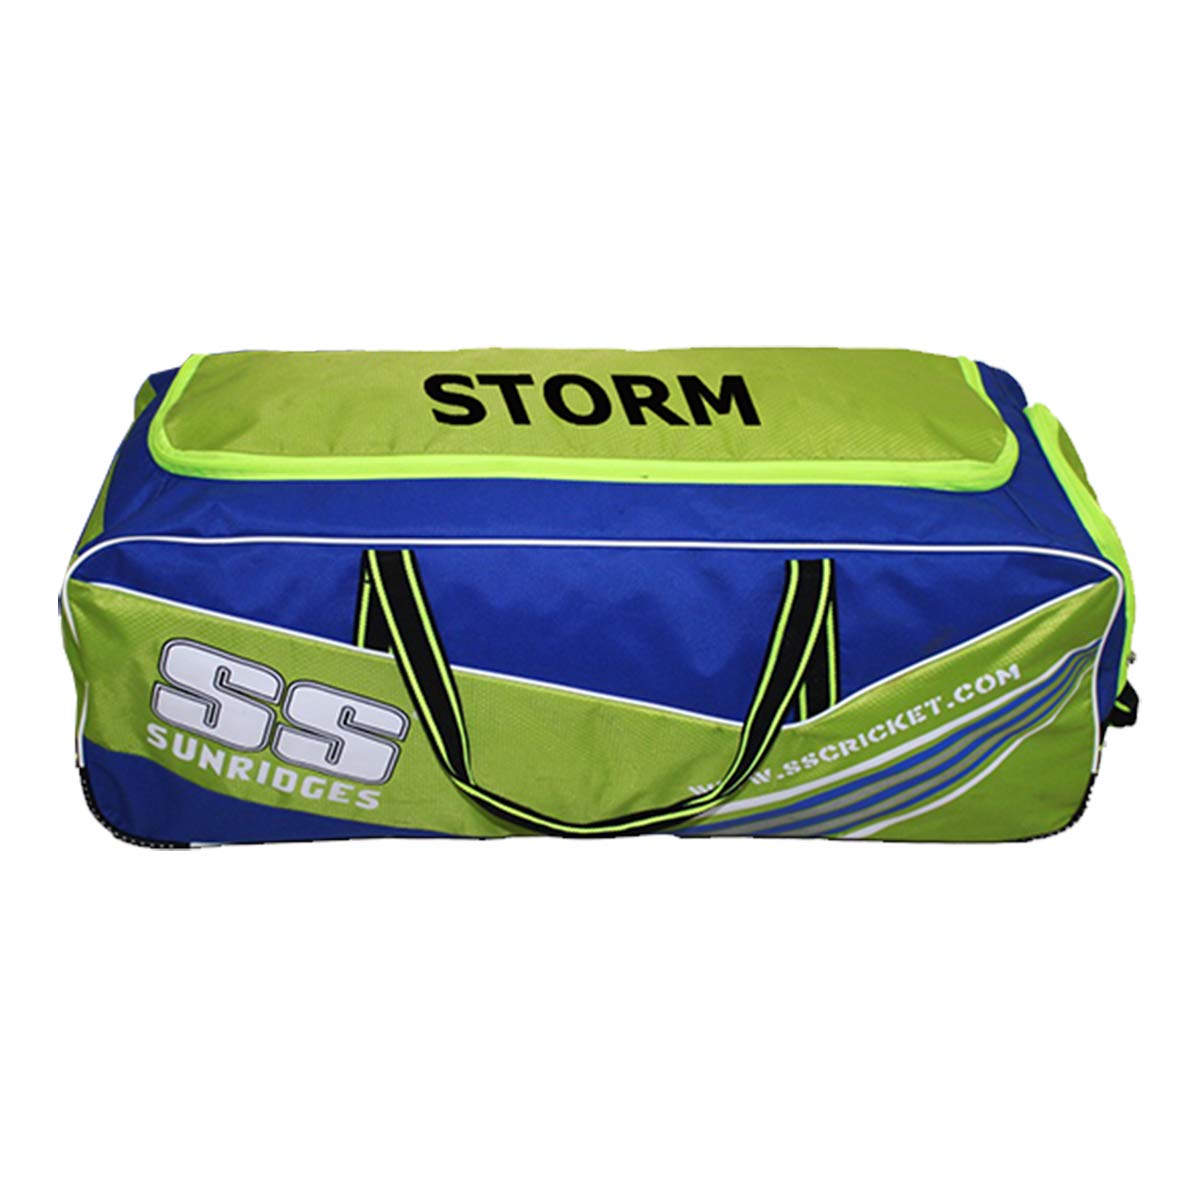 SS Double Wheel Cricket Kit Bag - Storm (Green-Blue) - Best Price online Prokicksports.com